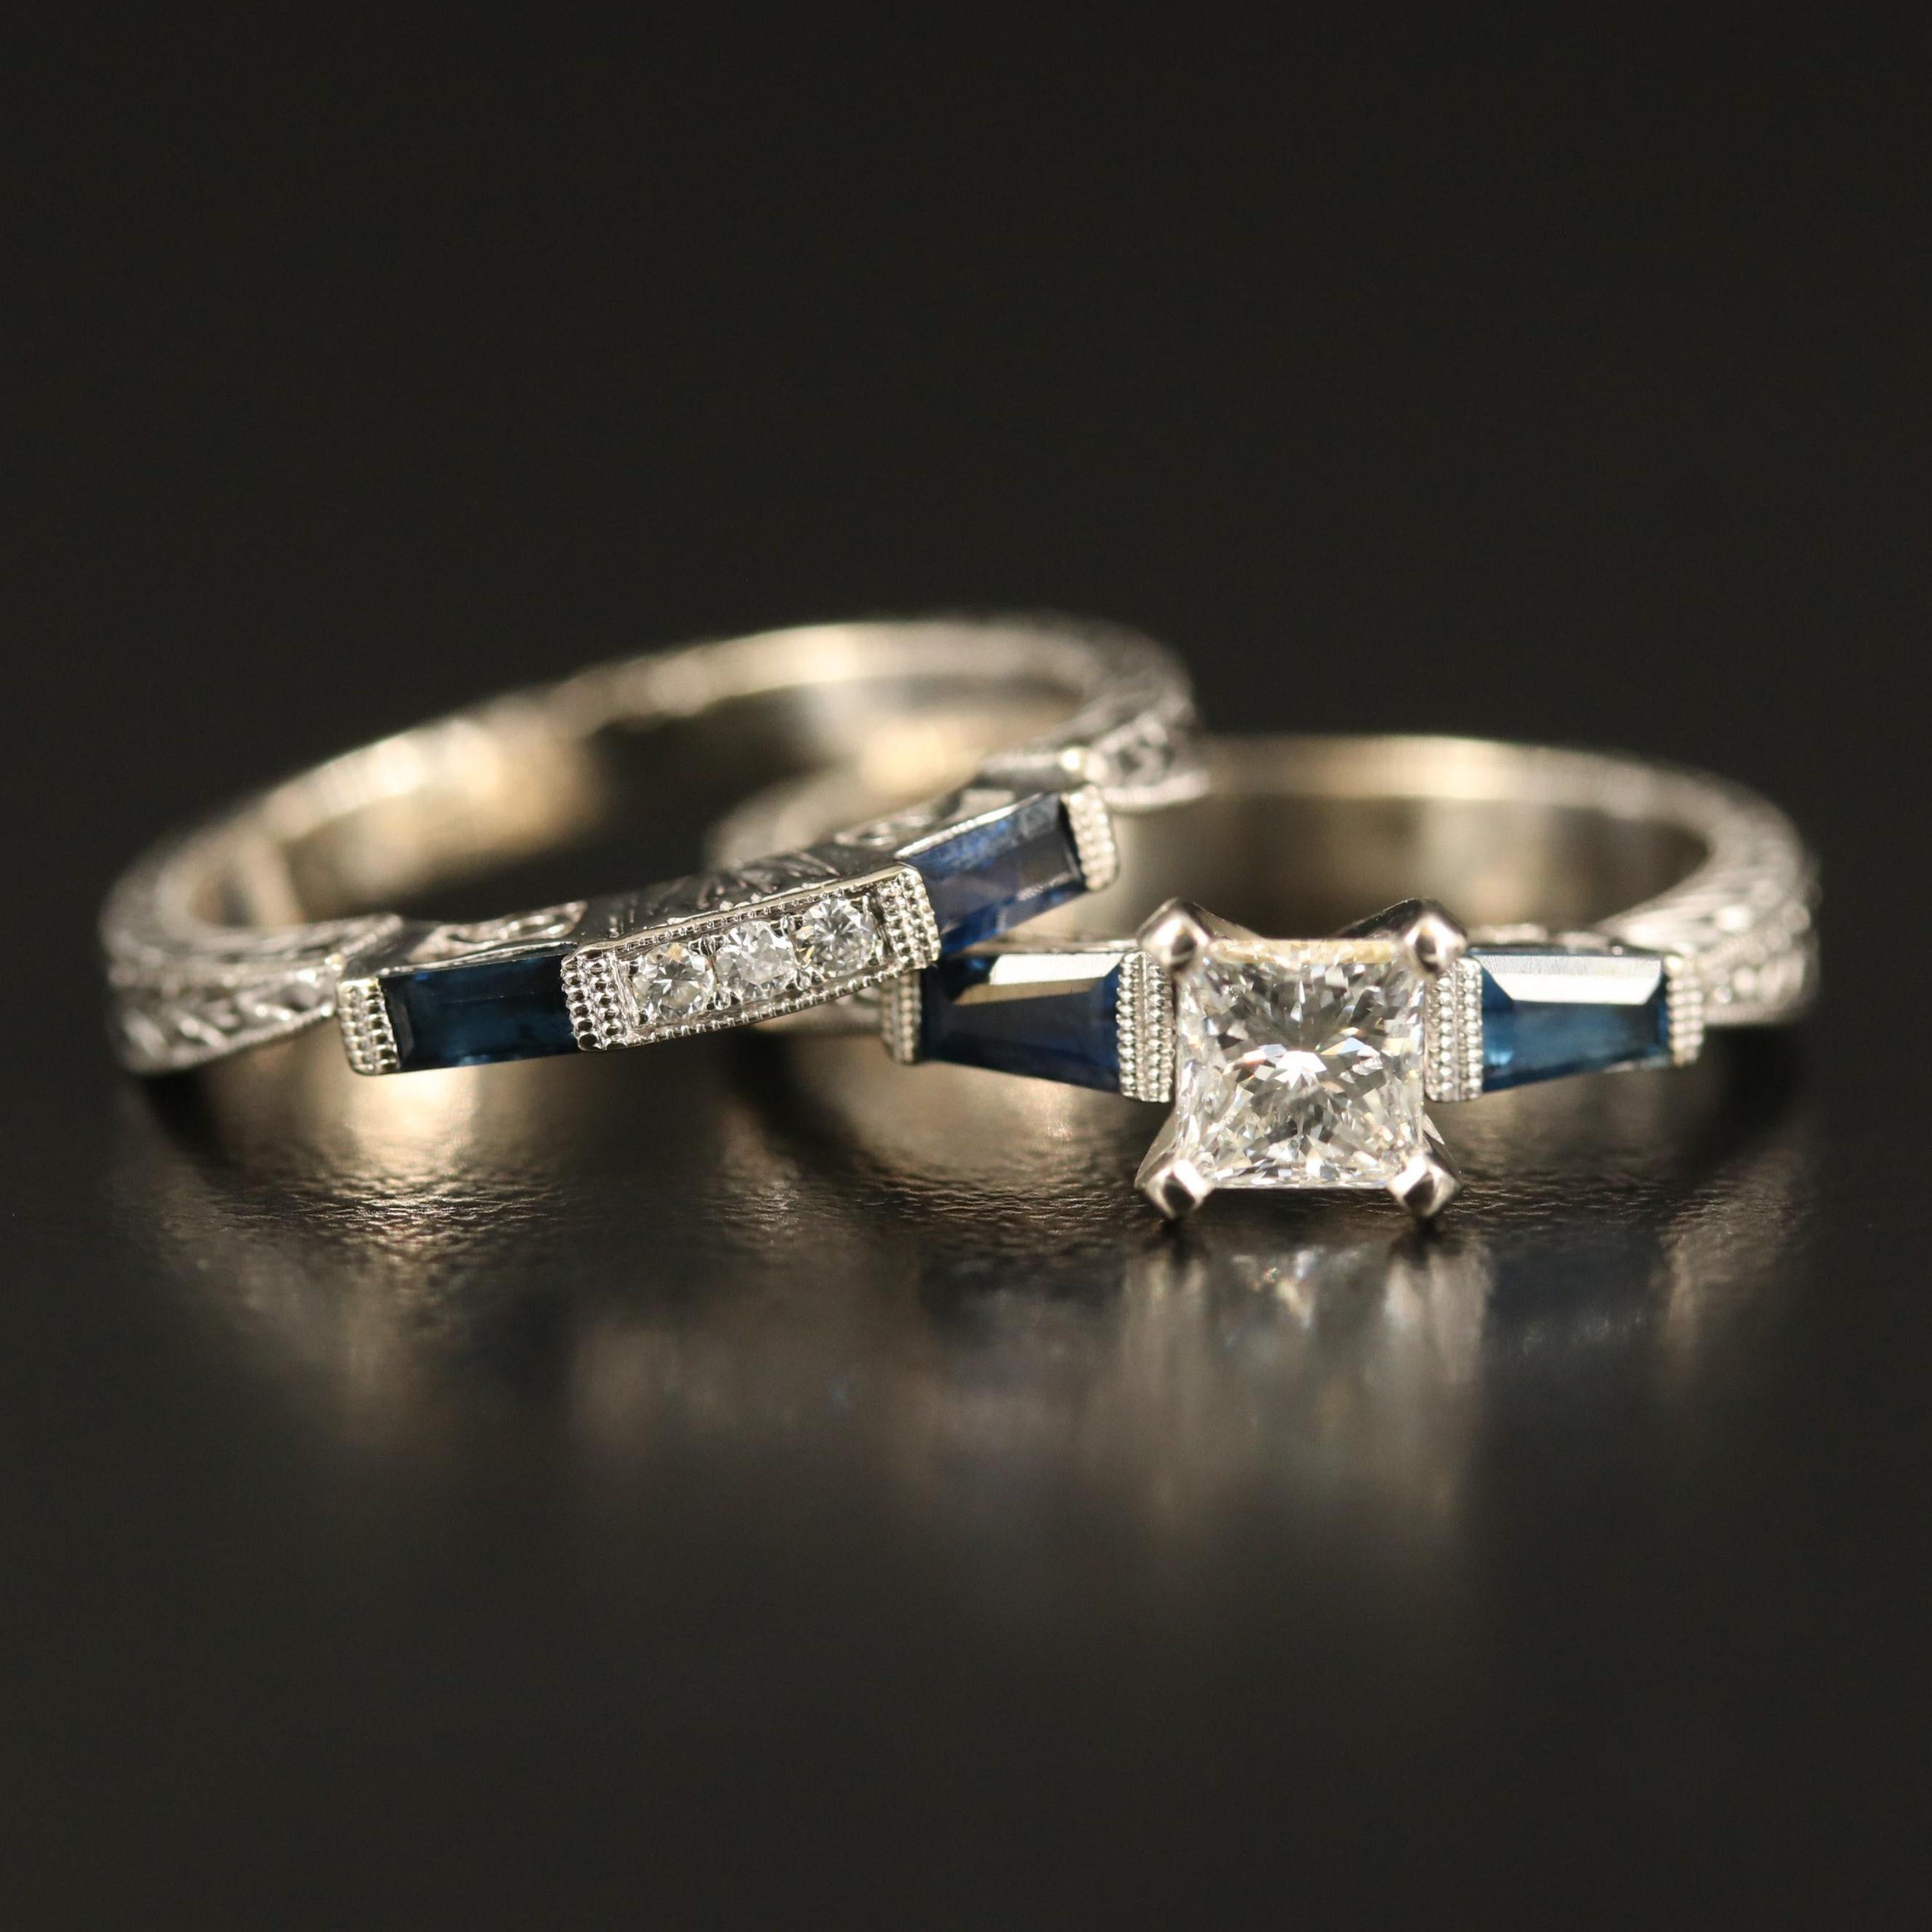 For Sale:  Vintage 1.23 Carat Princess Cut Diamond Sapphire Bridal Ring Set in 18K Gold 7